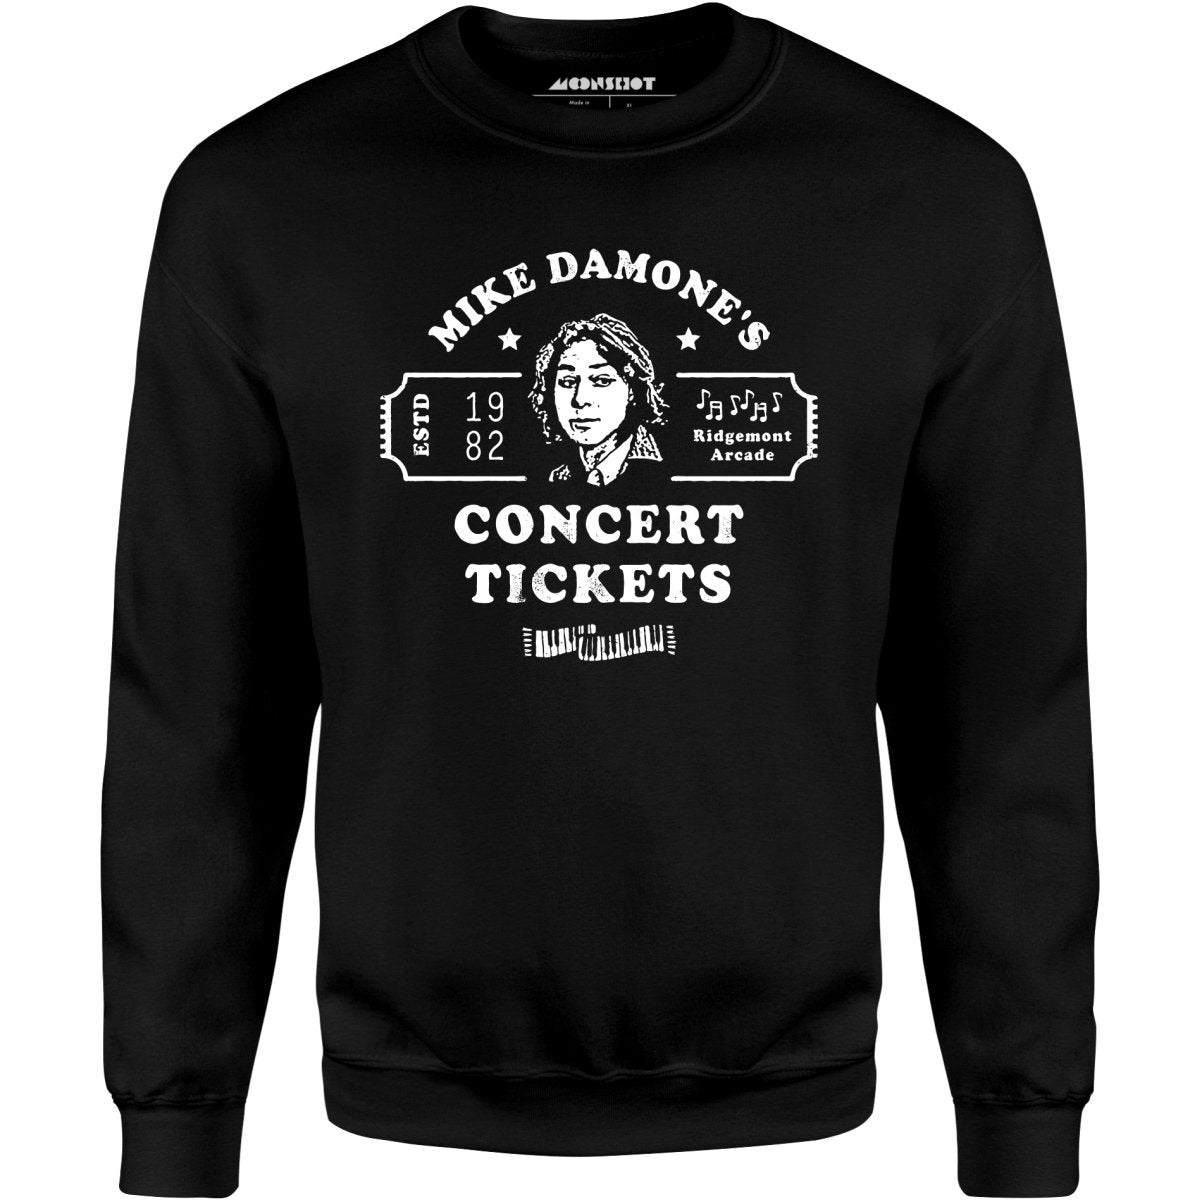 Mike Damone's Concert Tickets - Unisex Sweatshirt